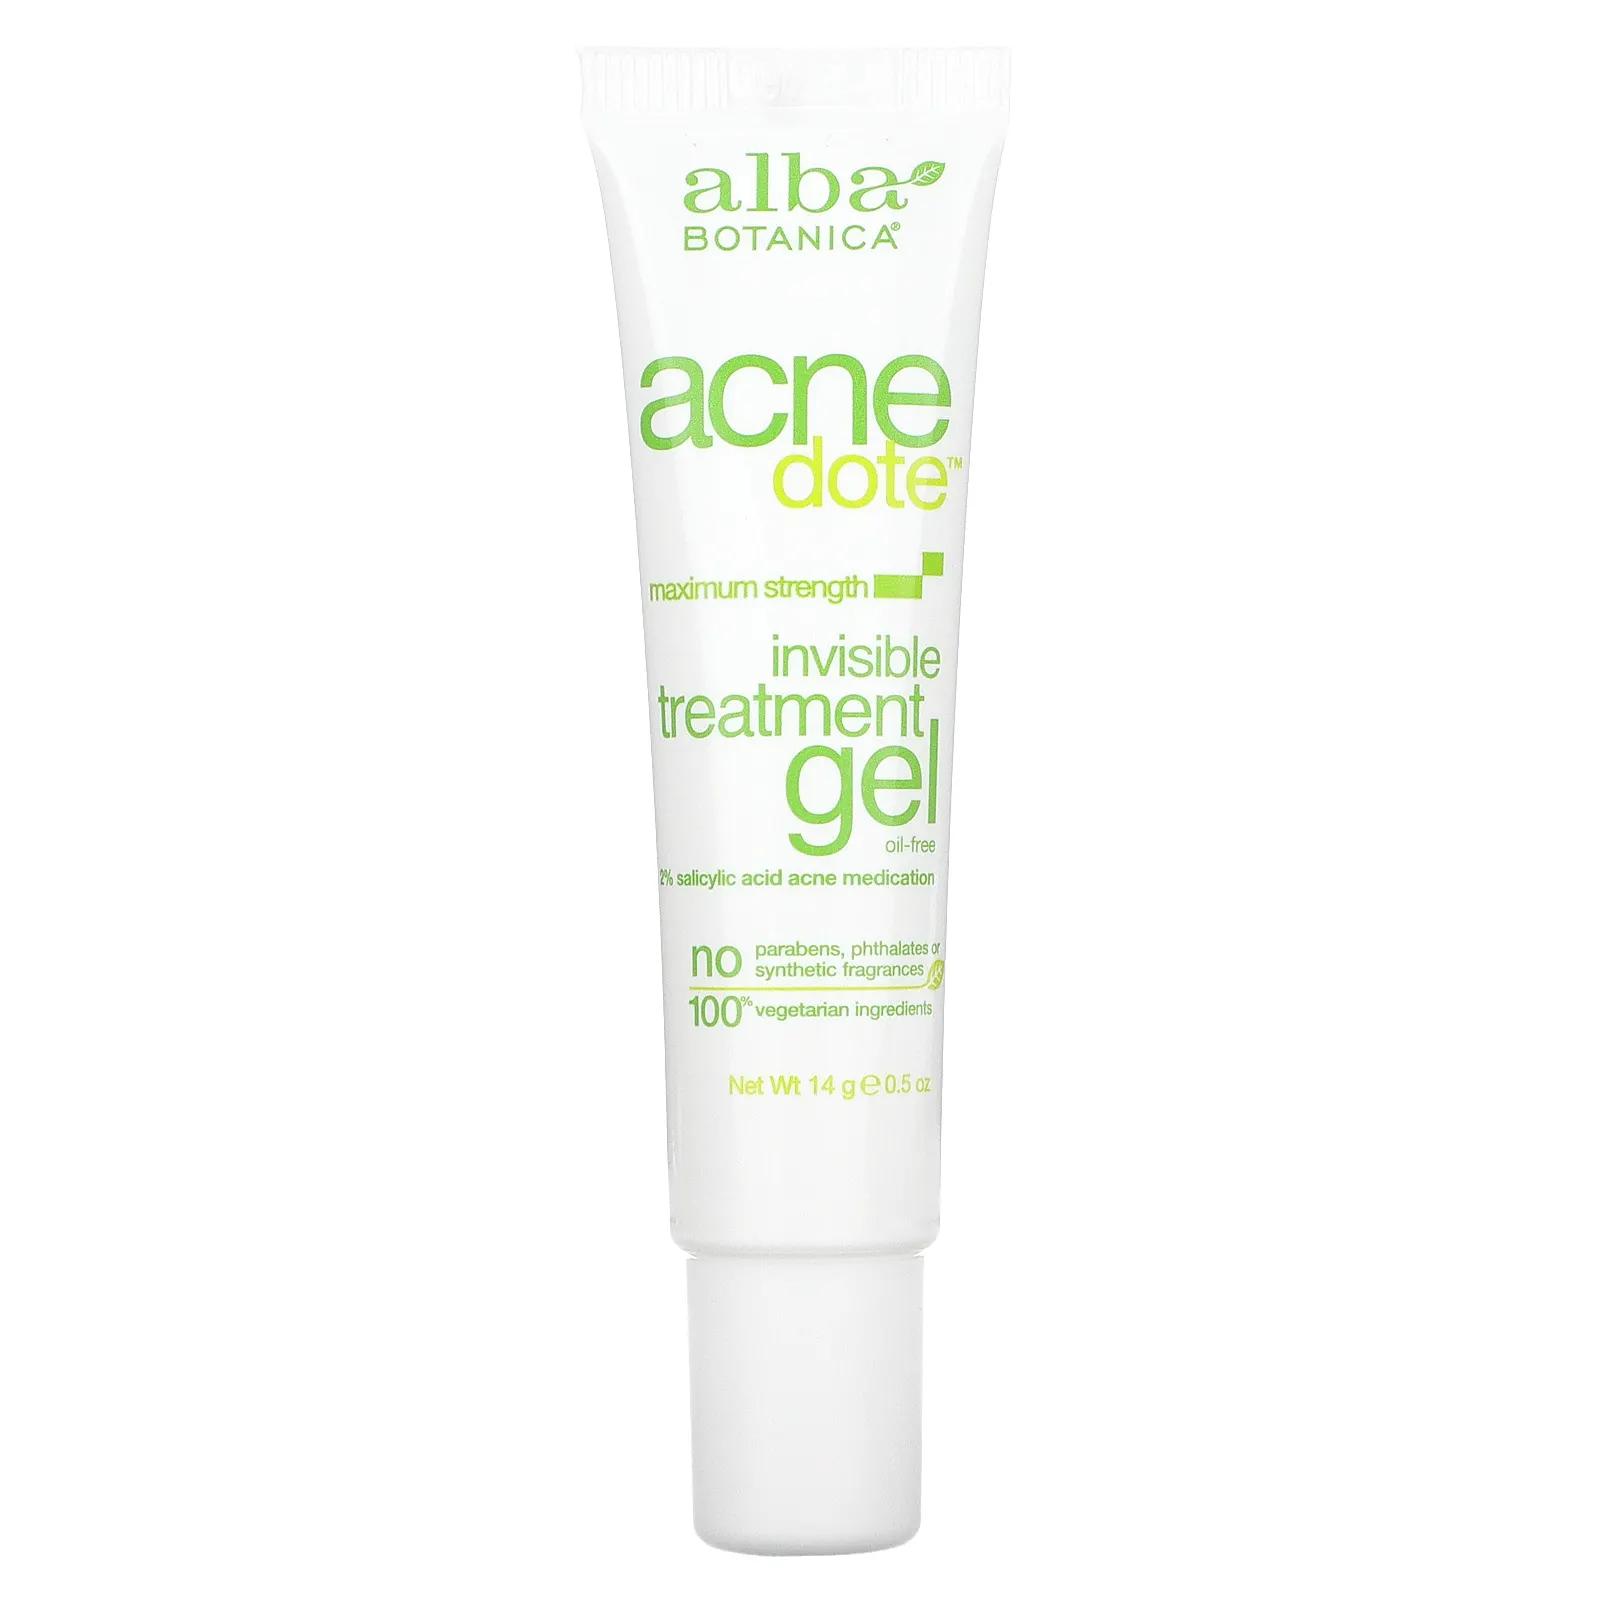 Alba Botanica Acne Dote Invisible Treatment Gel Oil-Free 0.5 oz (14 g) alba botanica acne dote невидимый гель по уходу за кожей нежирный 14 г 0 5 унции